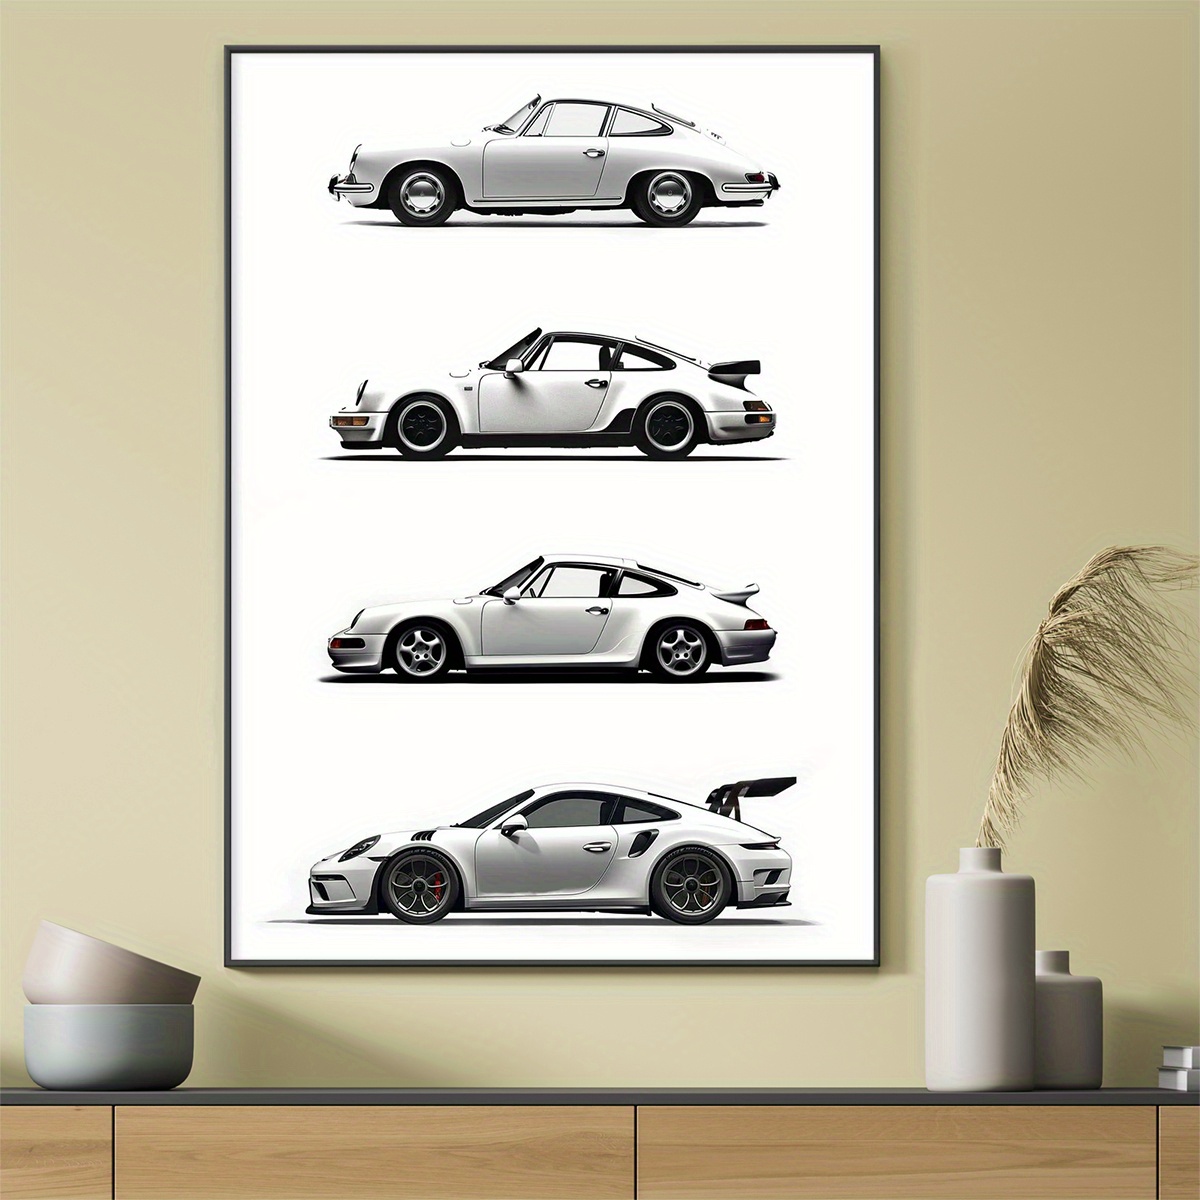 Wall Art Print 911 Carrera Car, Gifts & Merchandise